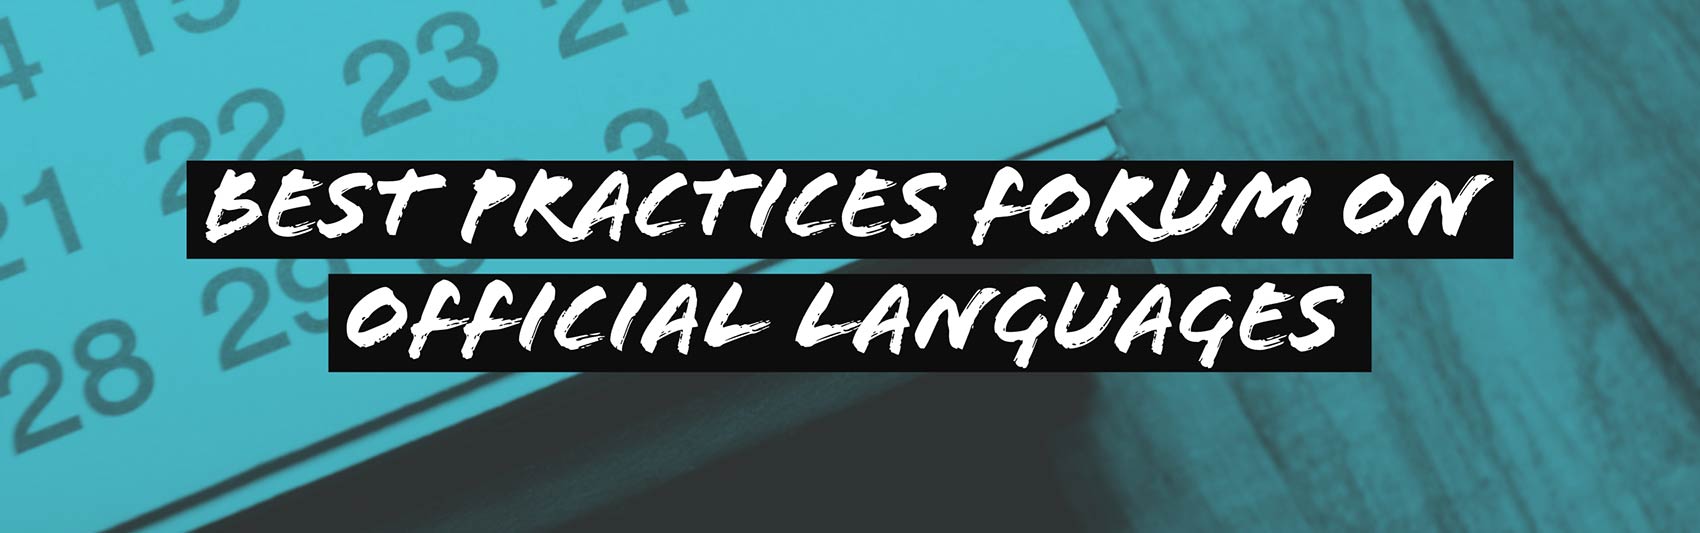 Official-Languages-Best-Practices-Forum-Banner.jpg